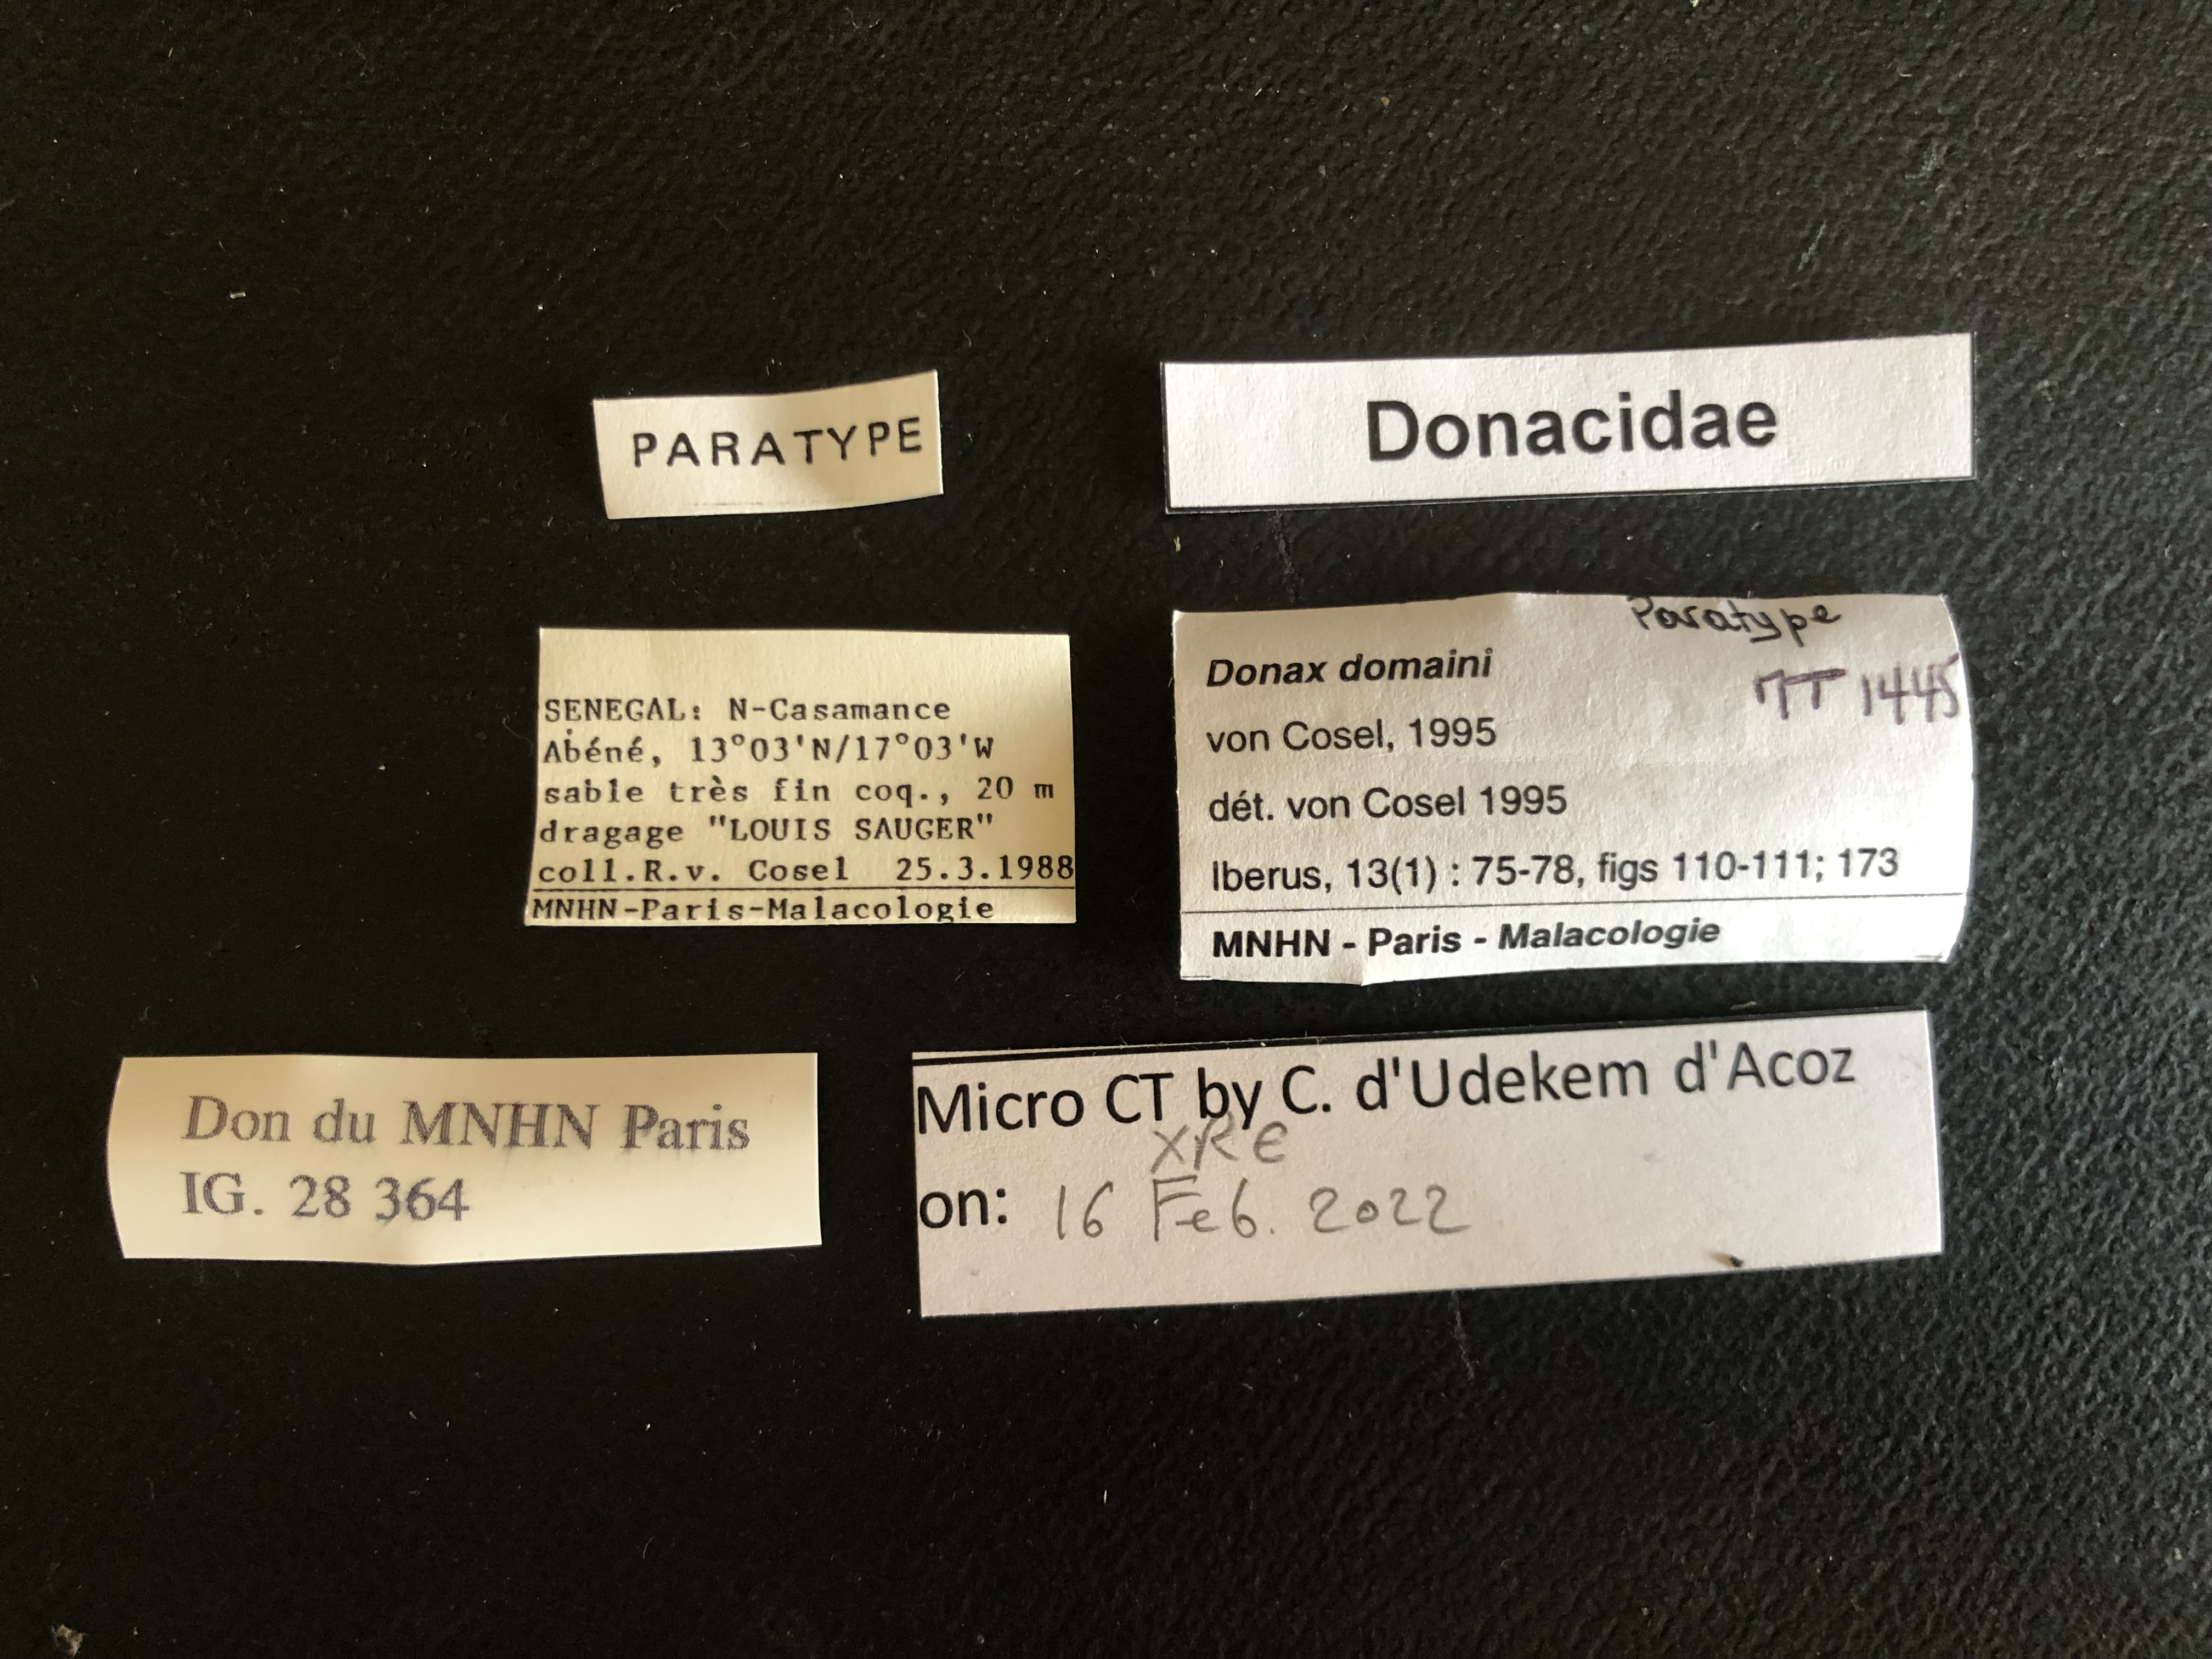 MT 1445 Donax domaini Labels